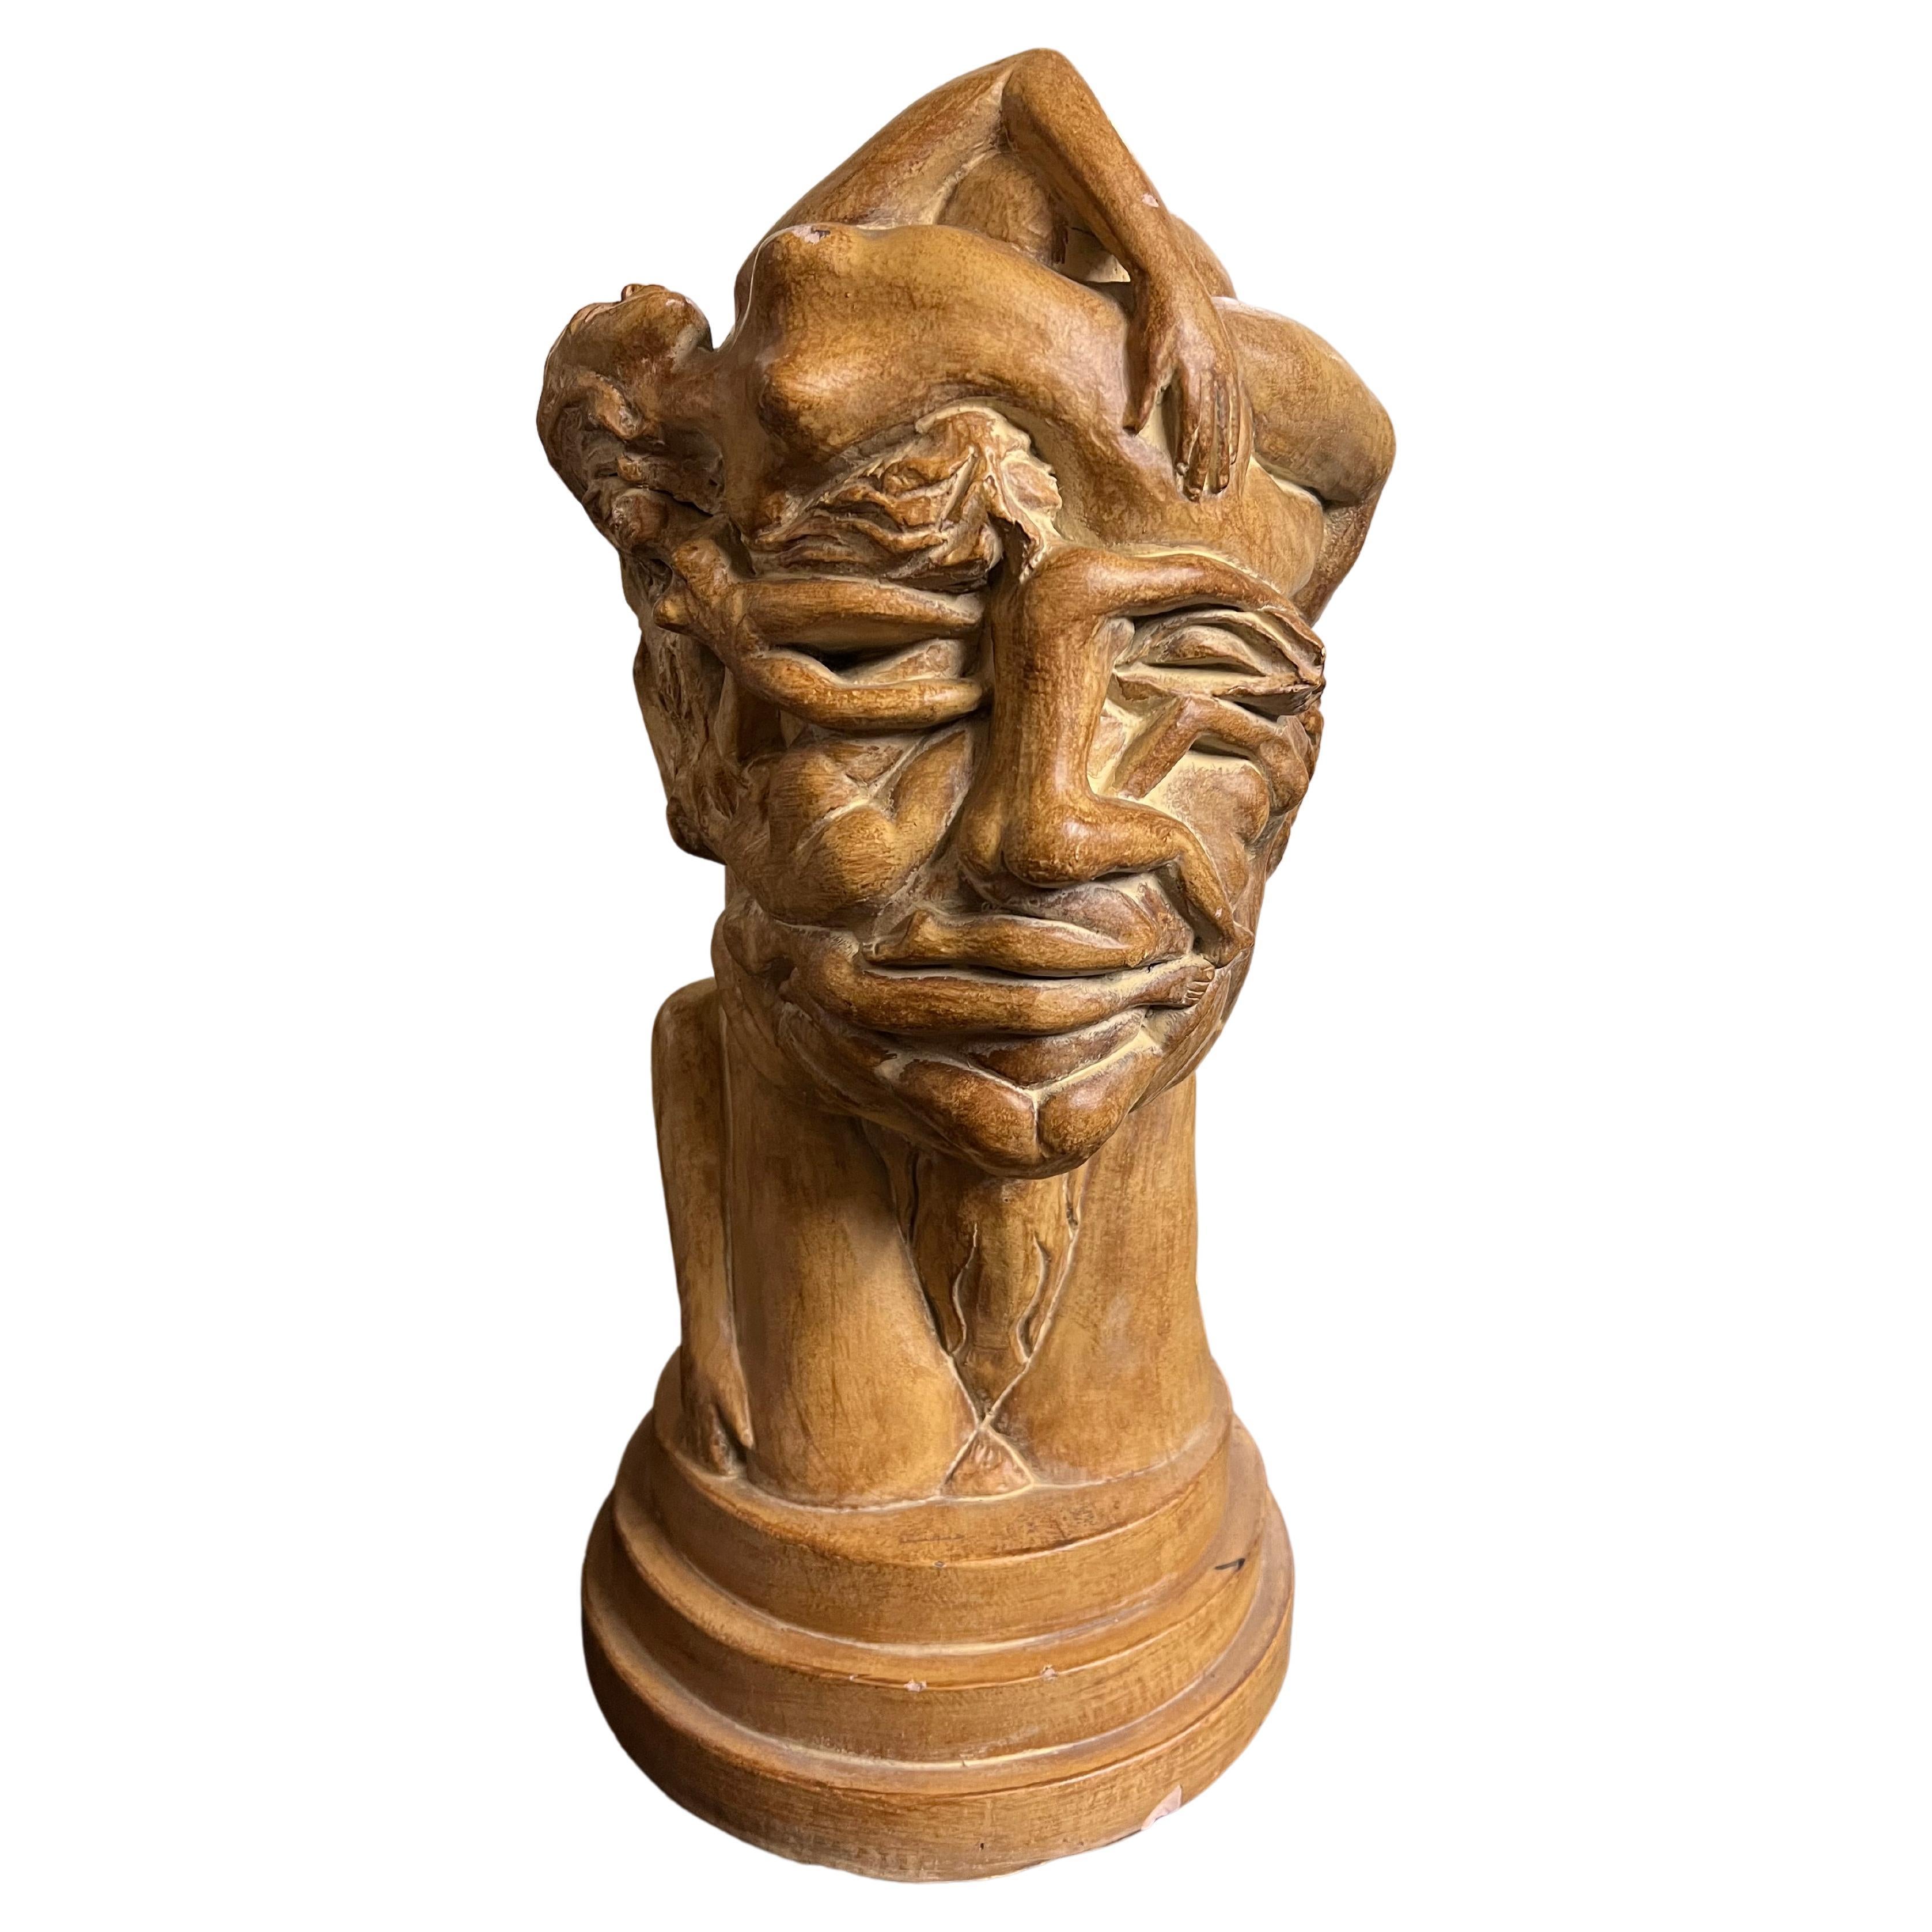 Face or Bust Sculpture